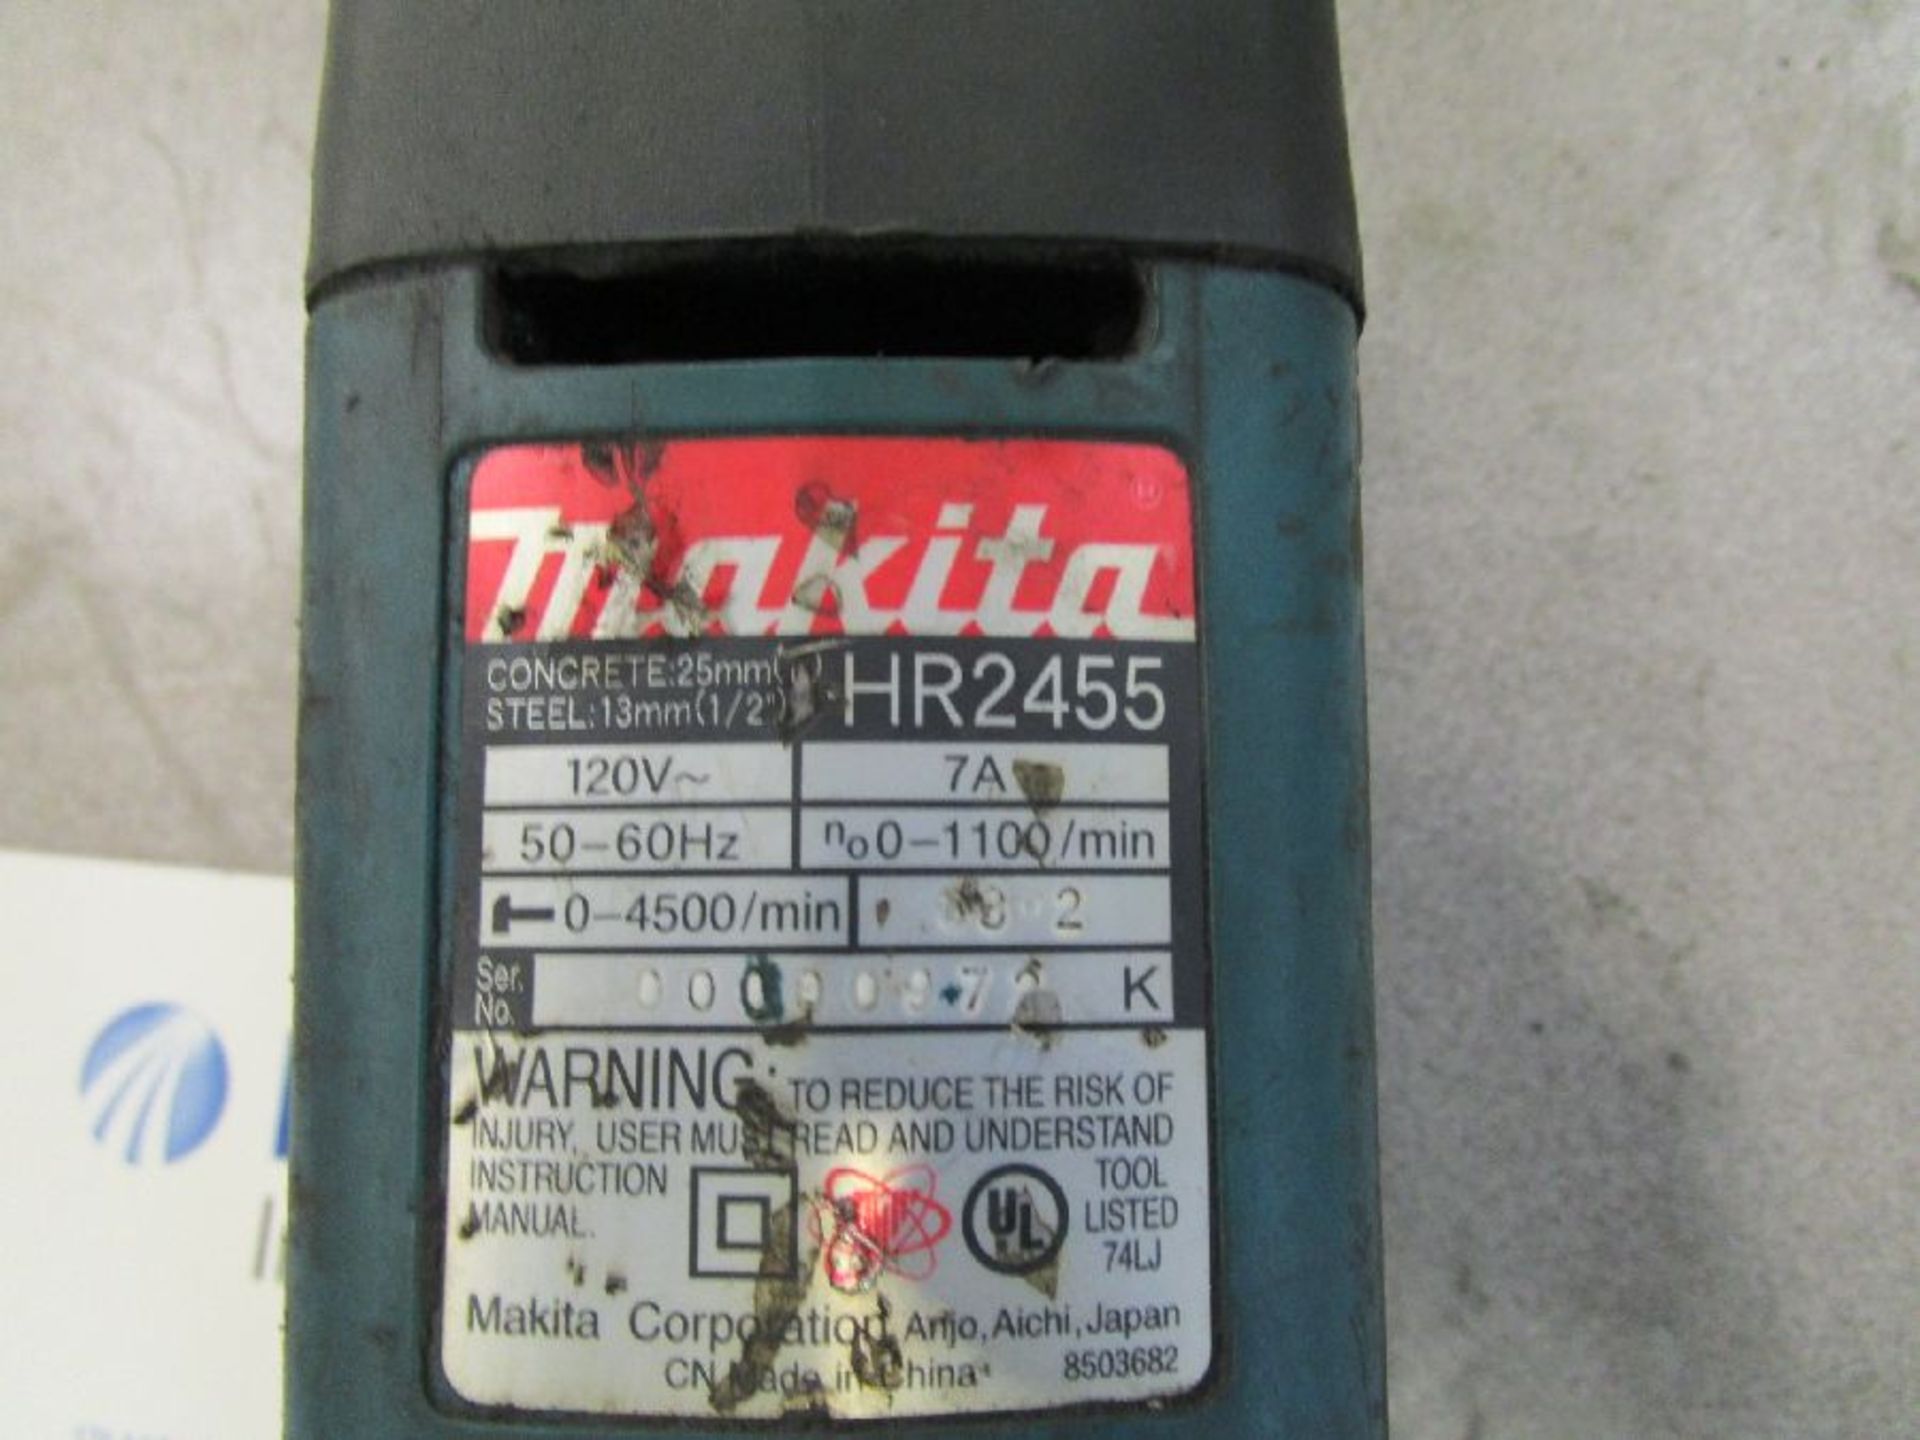 Makita Model HR2455 Rotary Hammer Drill - Image 2 of 3